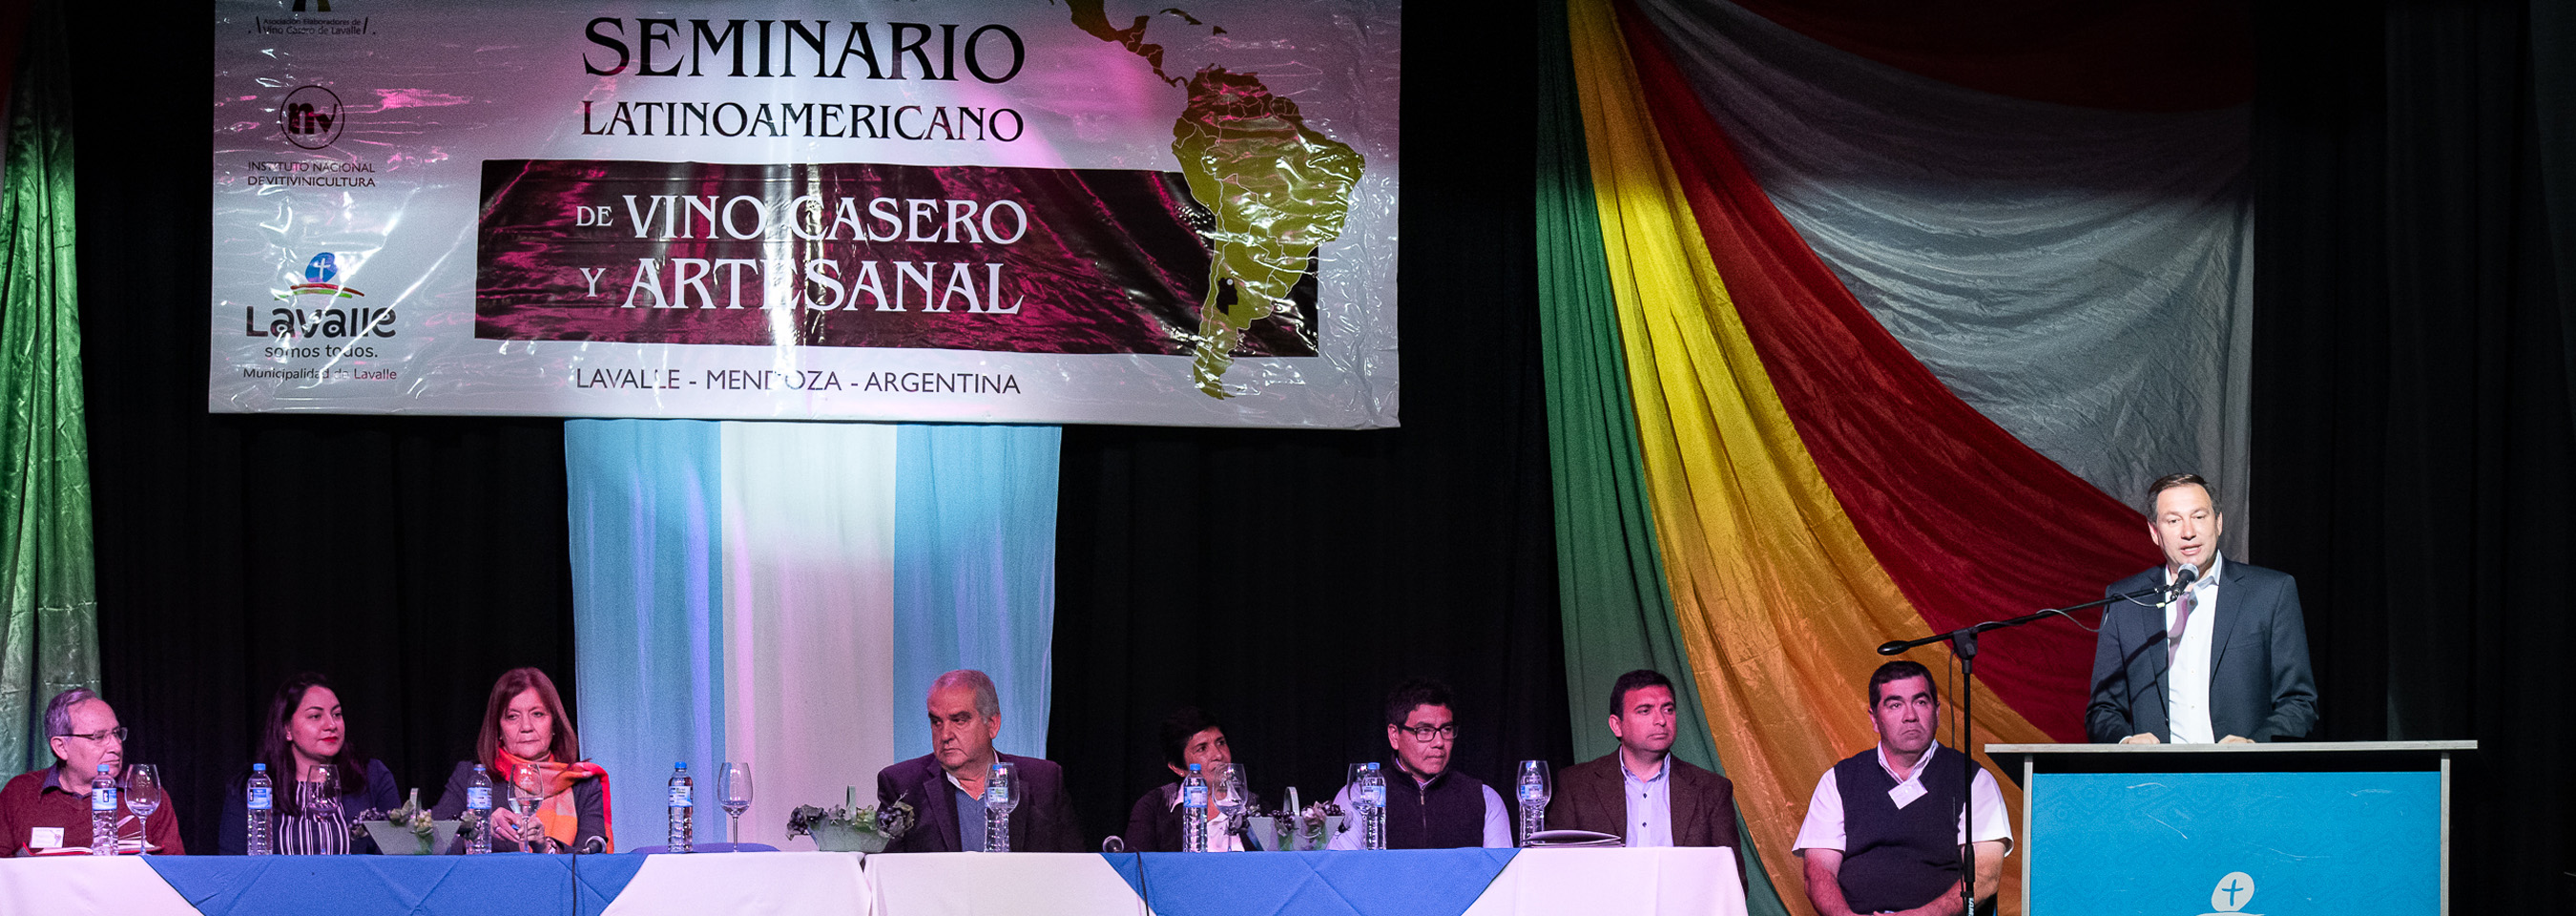 Segundo Seminario Latinoamericano de Vino Casero y Artesanal de Lavalle